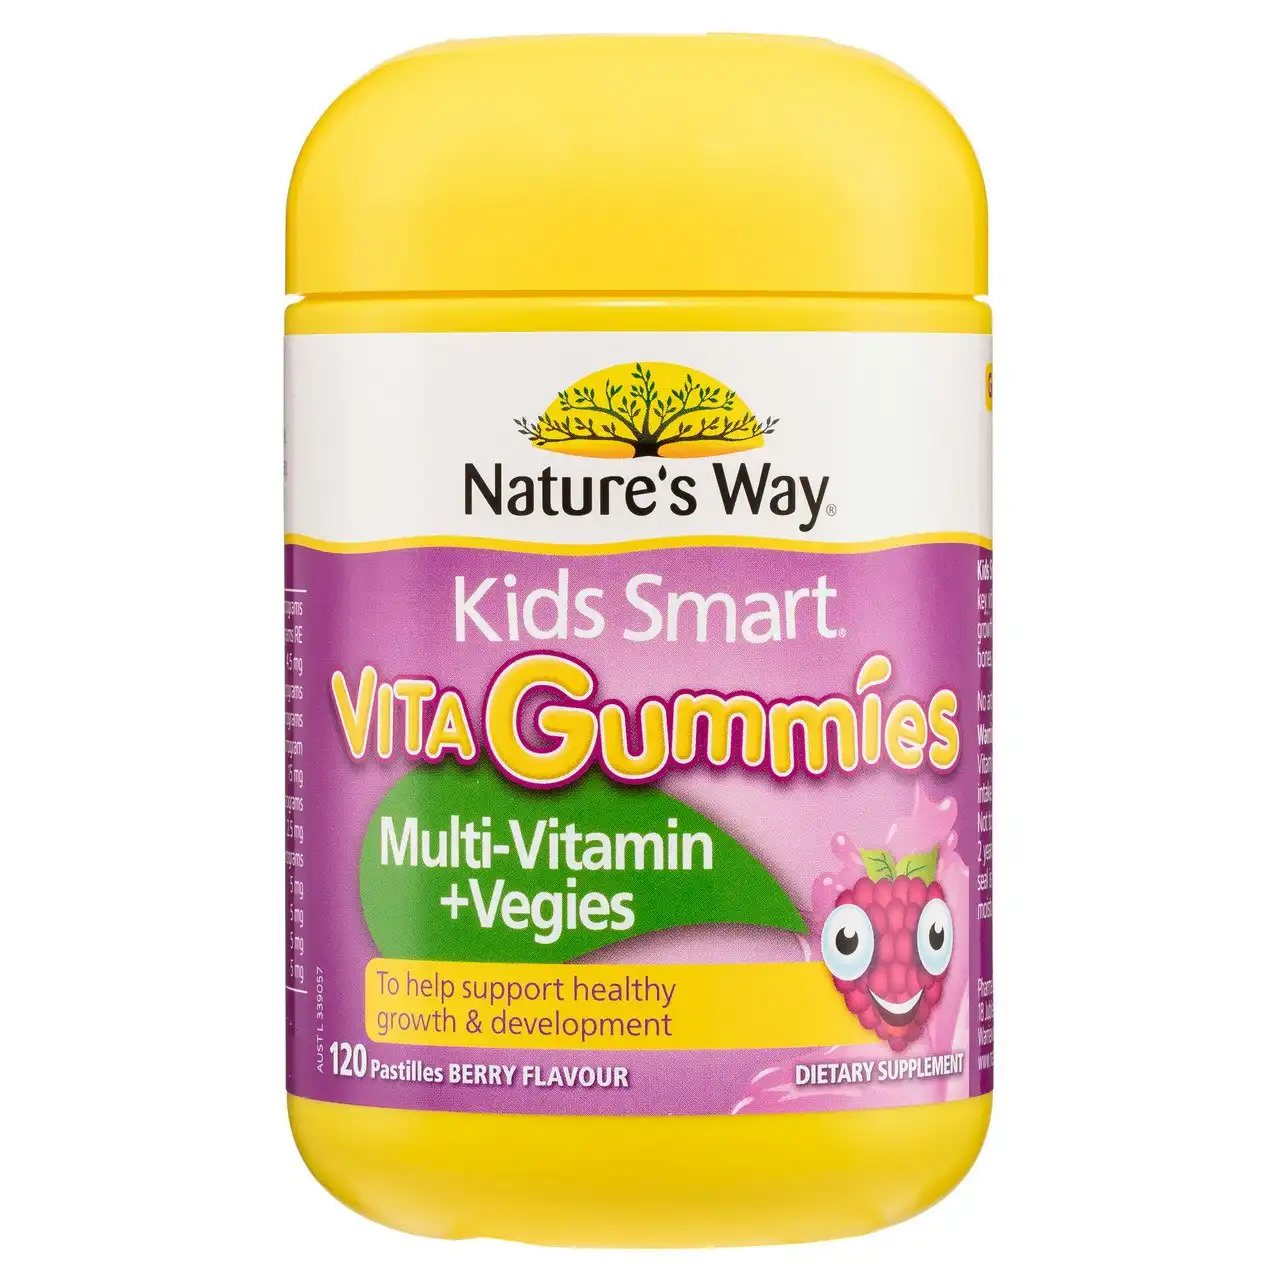 Nature's Way Kids Smart Vita Gummies Multi-Vitamin + Vegies 120's